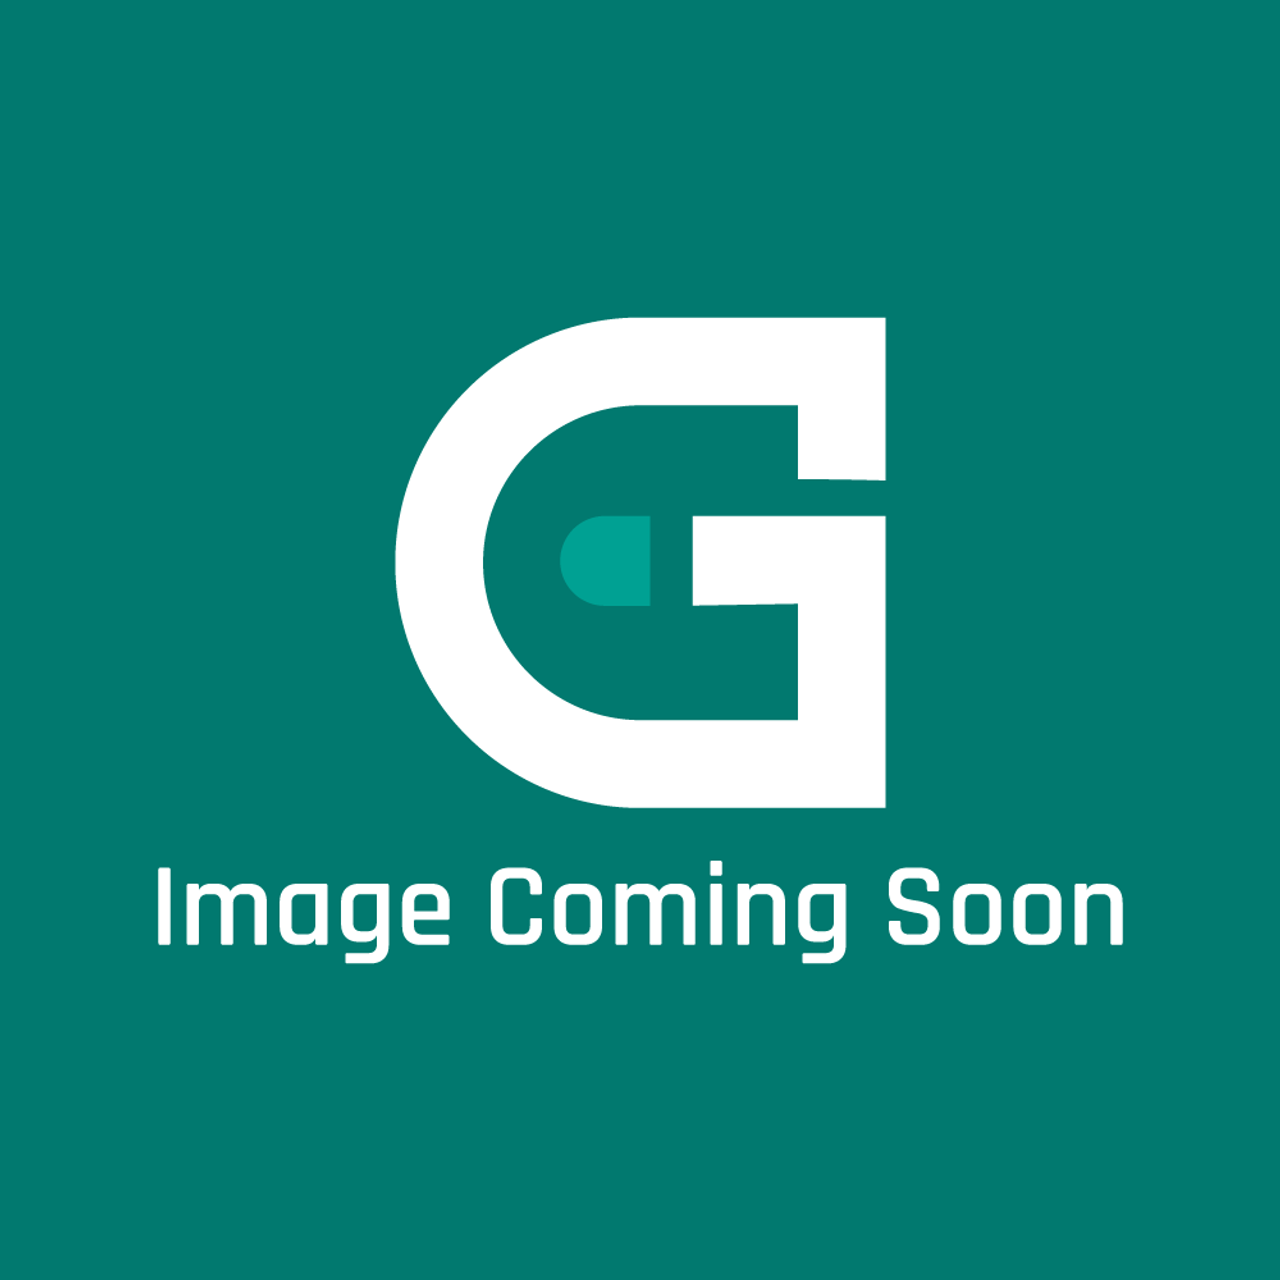 GE Appliances WB21K10152 - Safety Valve Asm - Image Coming Soon!